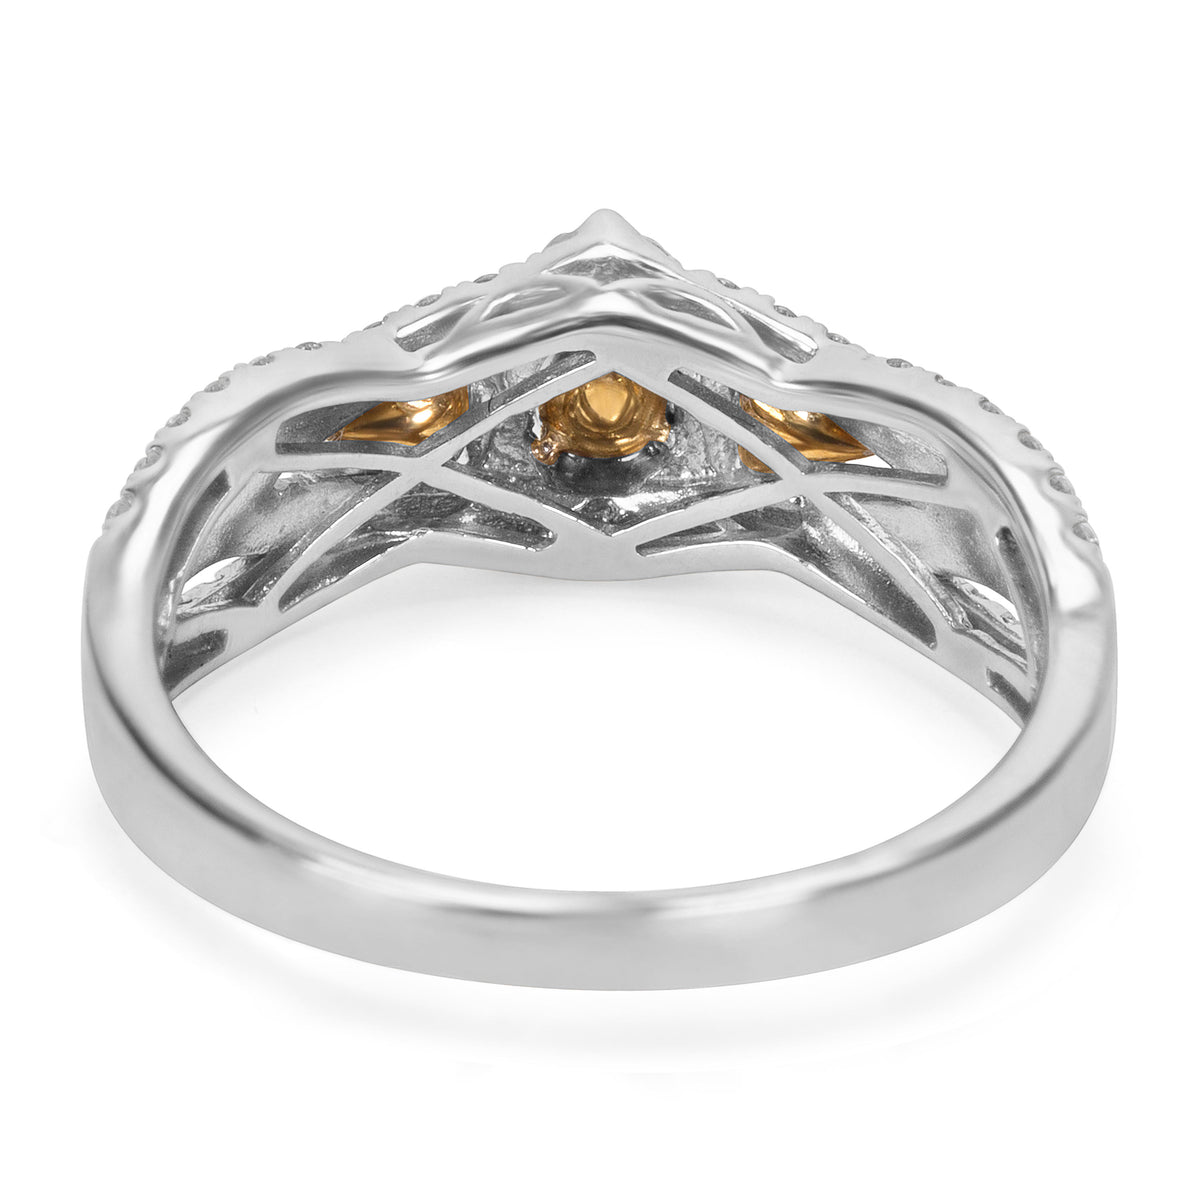 BRAND NEW Yellow Diamond Ring in 14K White Gold (1.00 CTW)